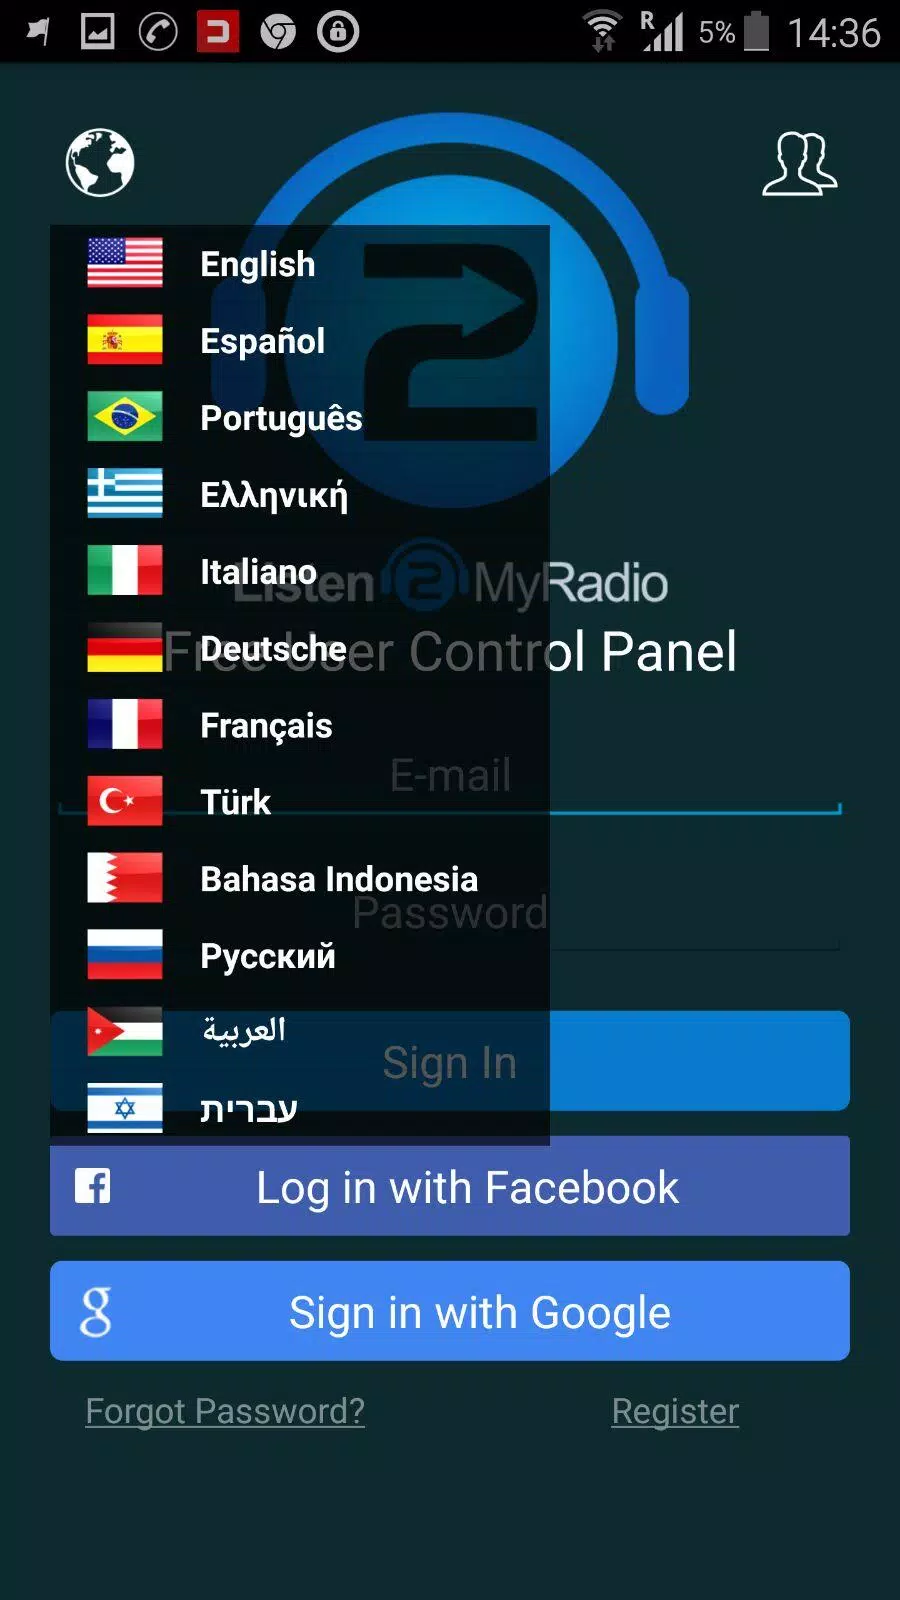 Descarga de APK de Listen2MyRadio Control Panel para Android